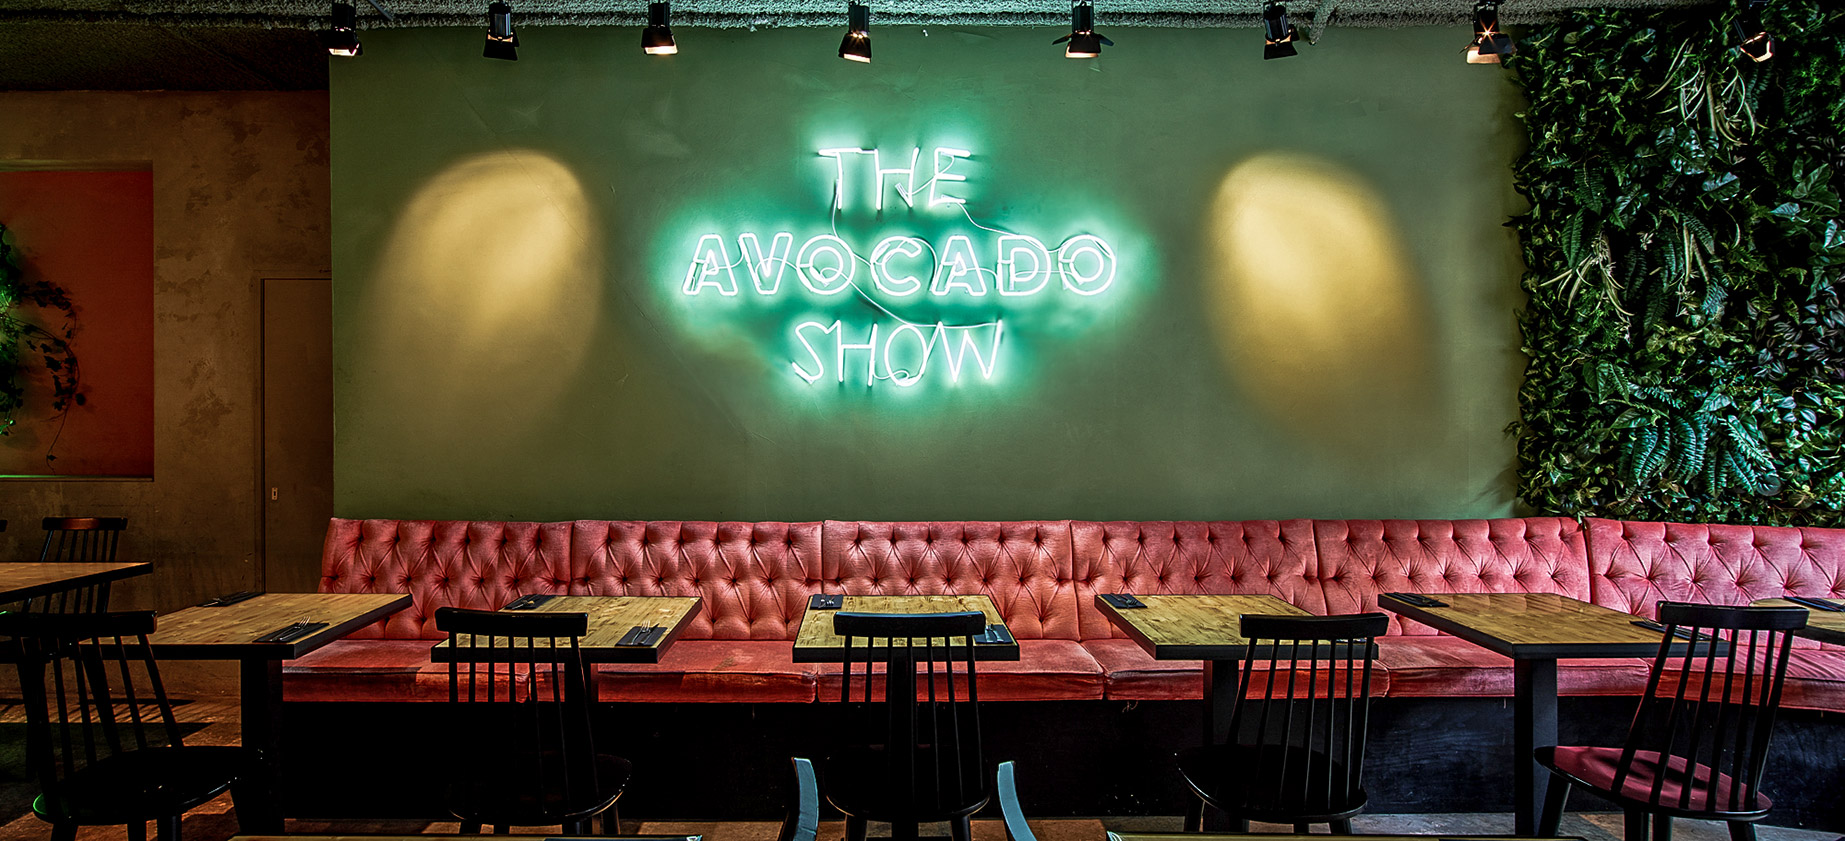 The Avocado Shop